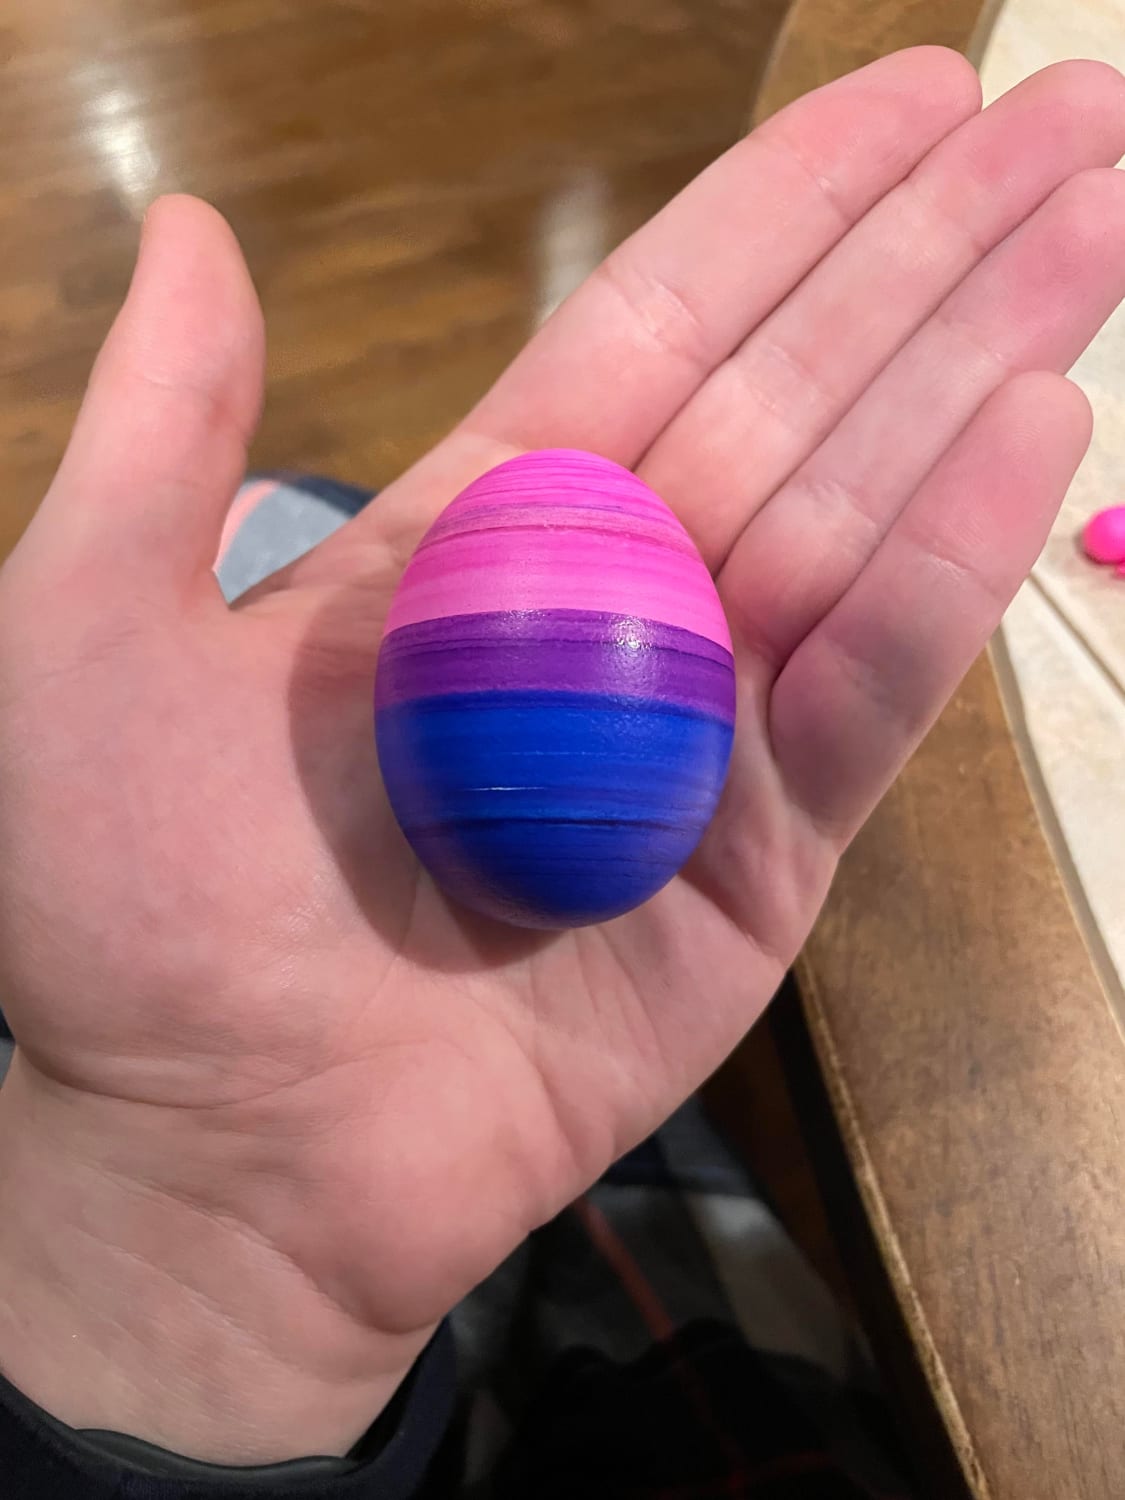 My bi pride Easter egg I just made!